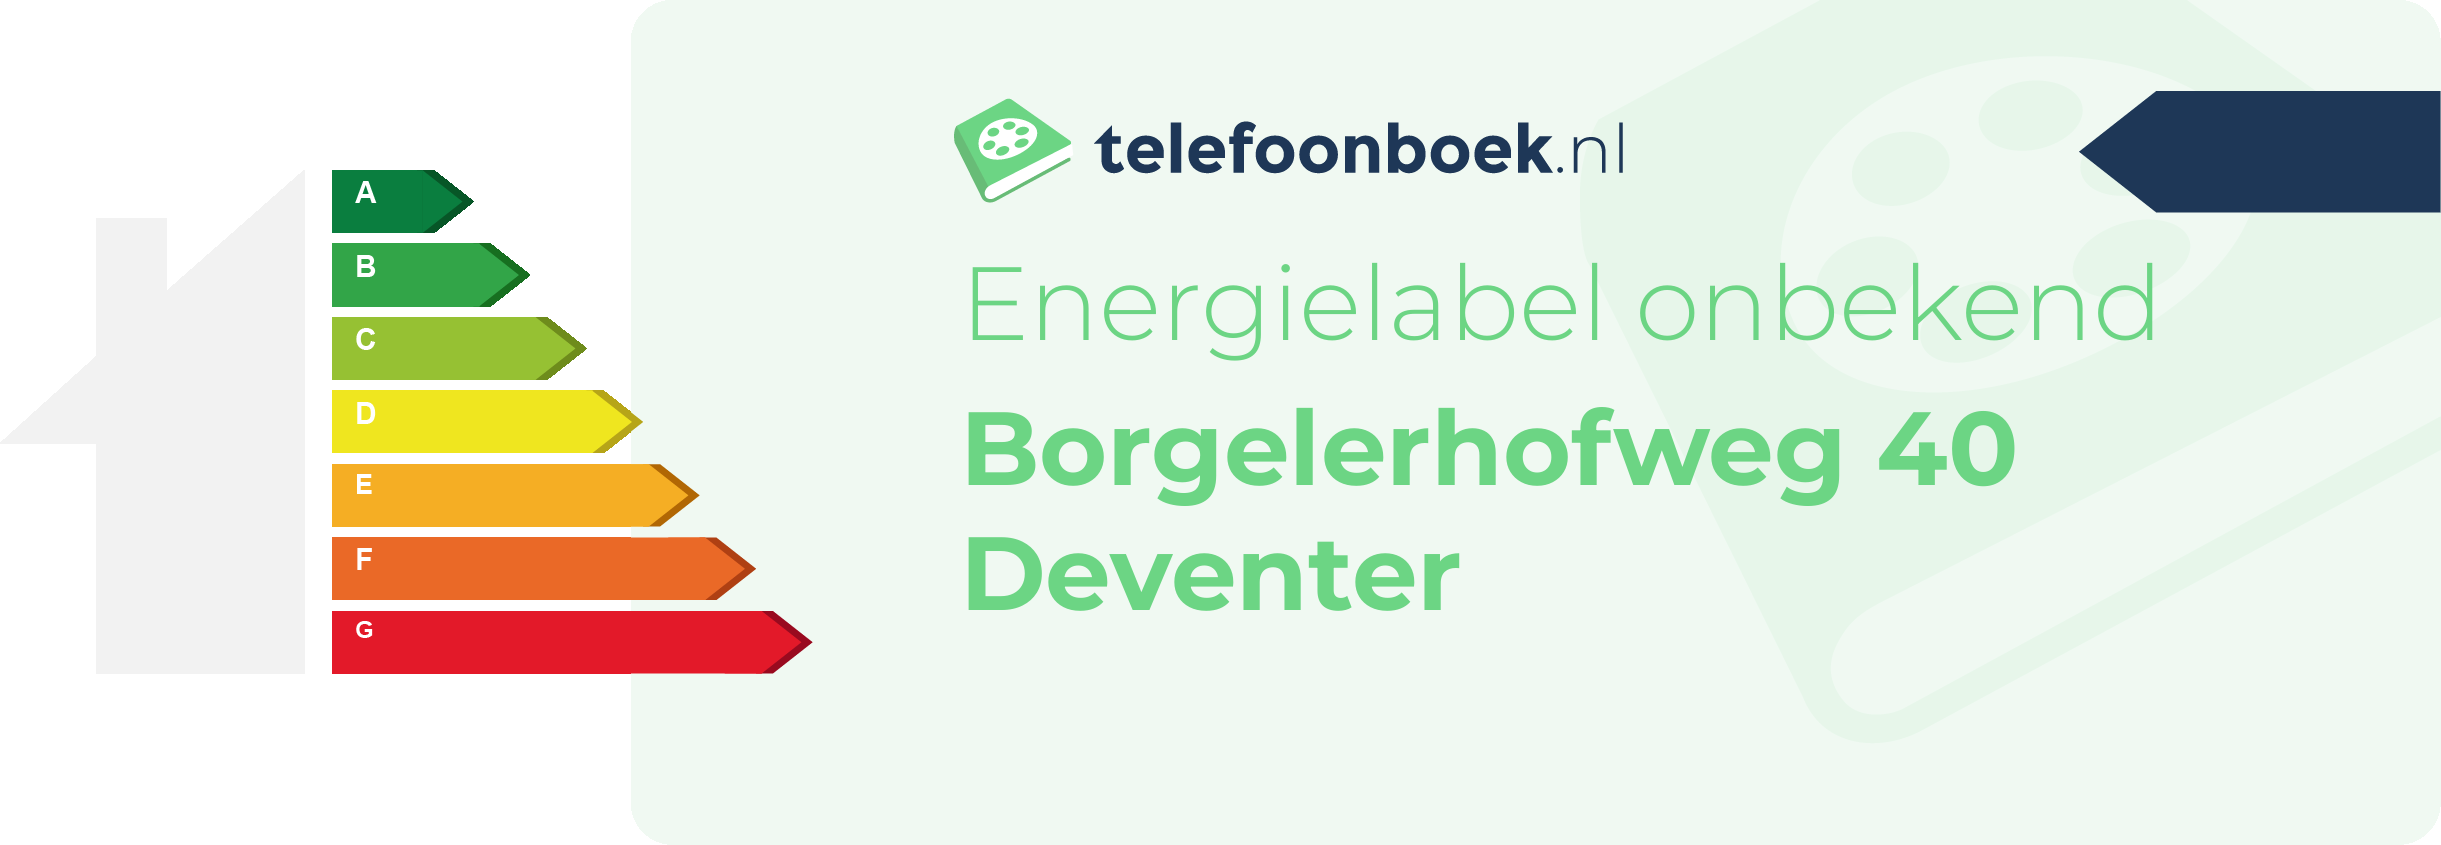 Energielabel Borgelerhofweg 40 Deventer